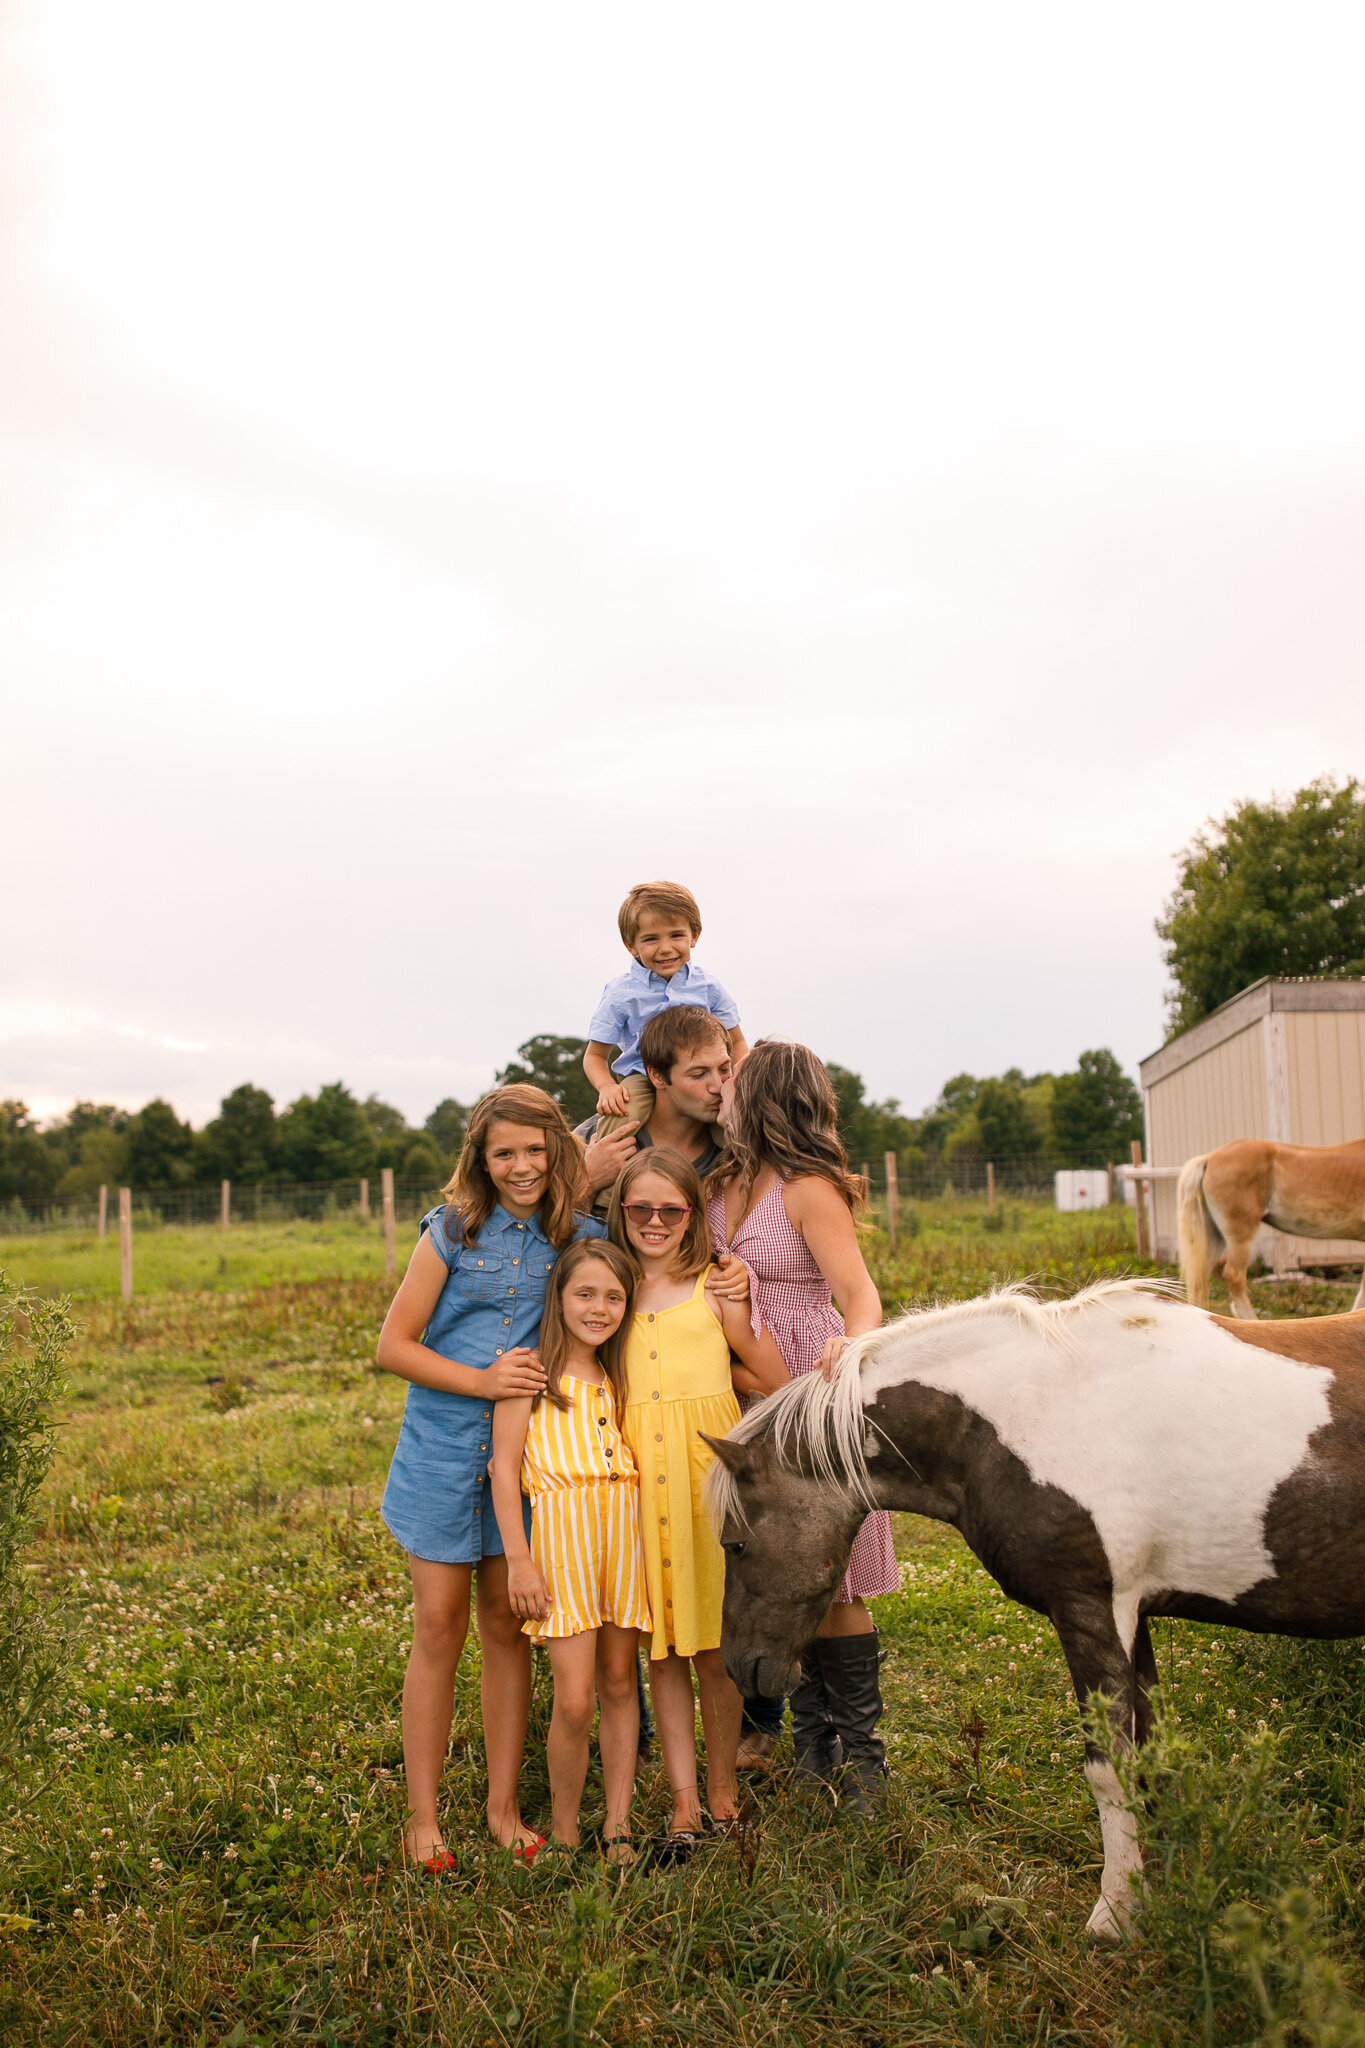 Grand Rapids Lifestyle Family Photographer - West Michigan Family Photography - Farm living - farm family photos - j darling photo - rockford family photographer - torren family 019.jpg